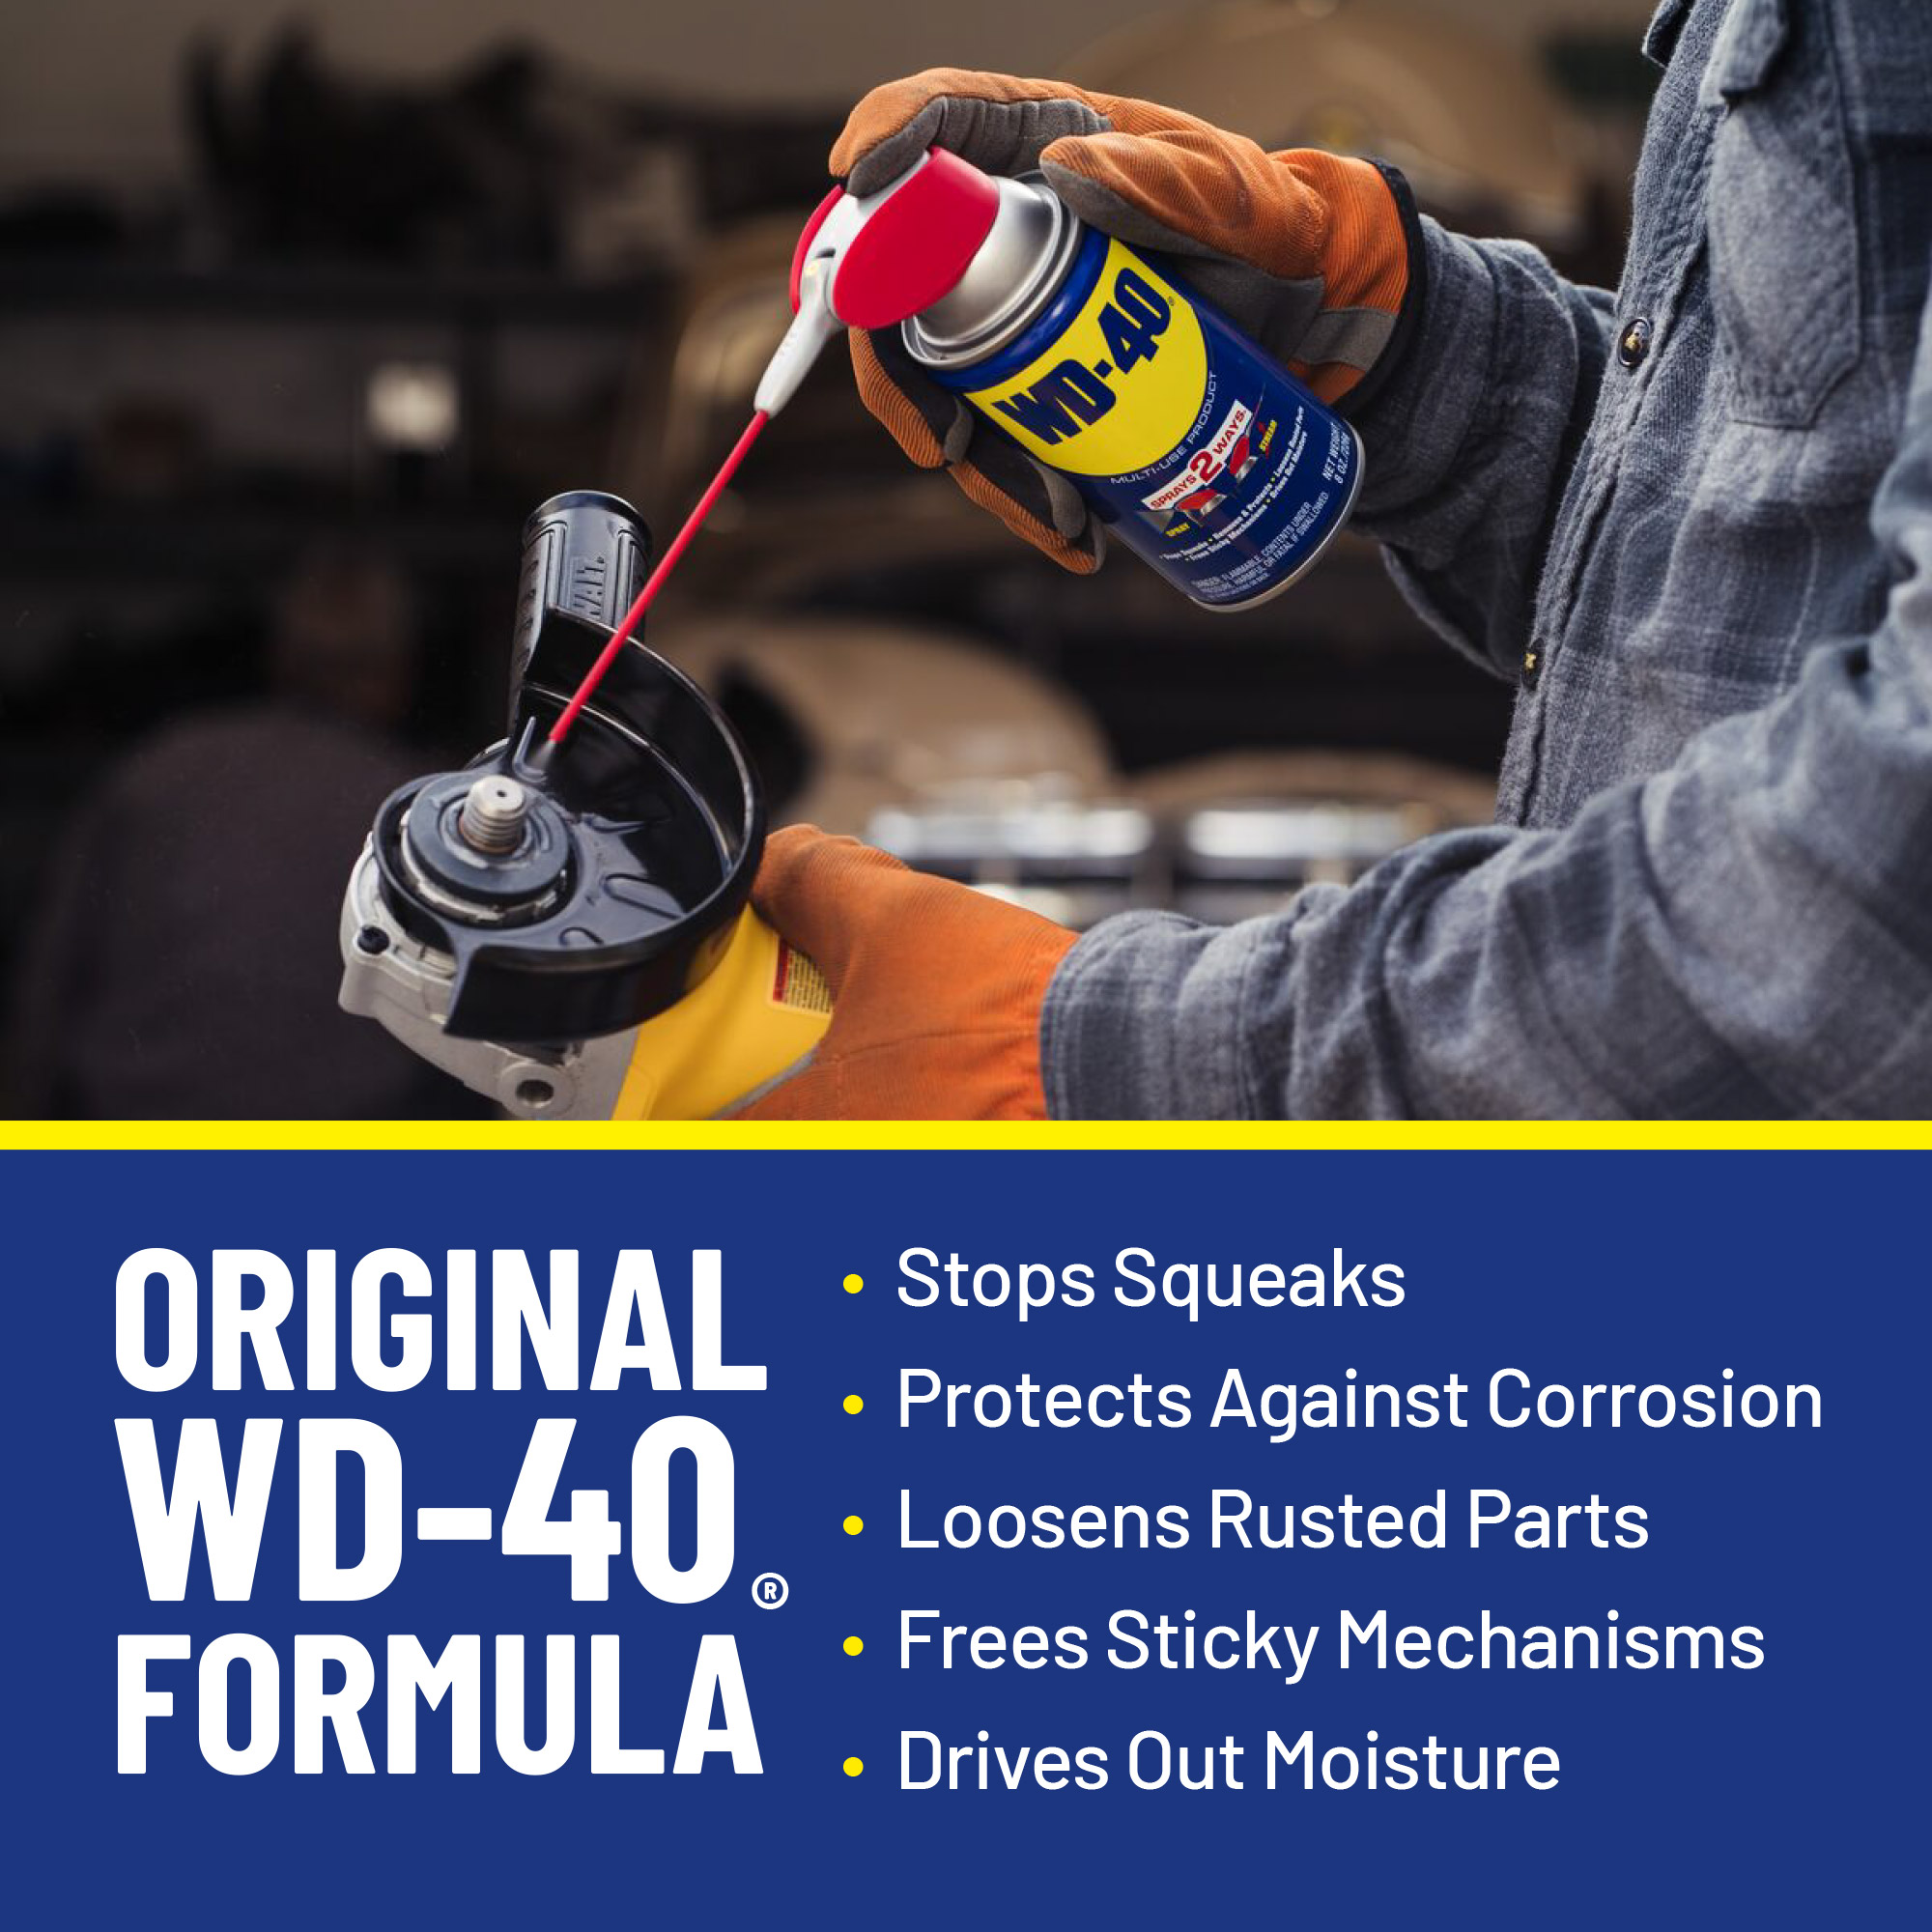 Original WD-40 Formula, Multi-Use Product With Smart Straw Sprays 2 Ways, Multi-Purpose Lubricant Spray, 12 oz - image 5 of 9